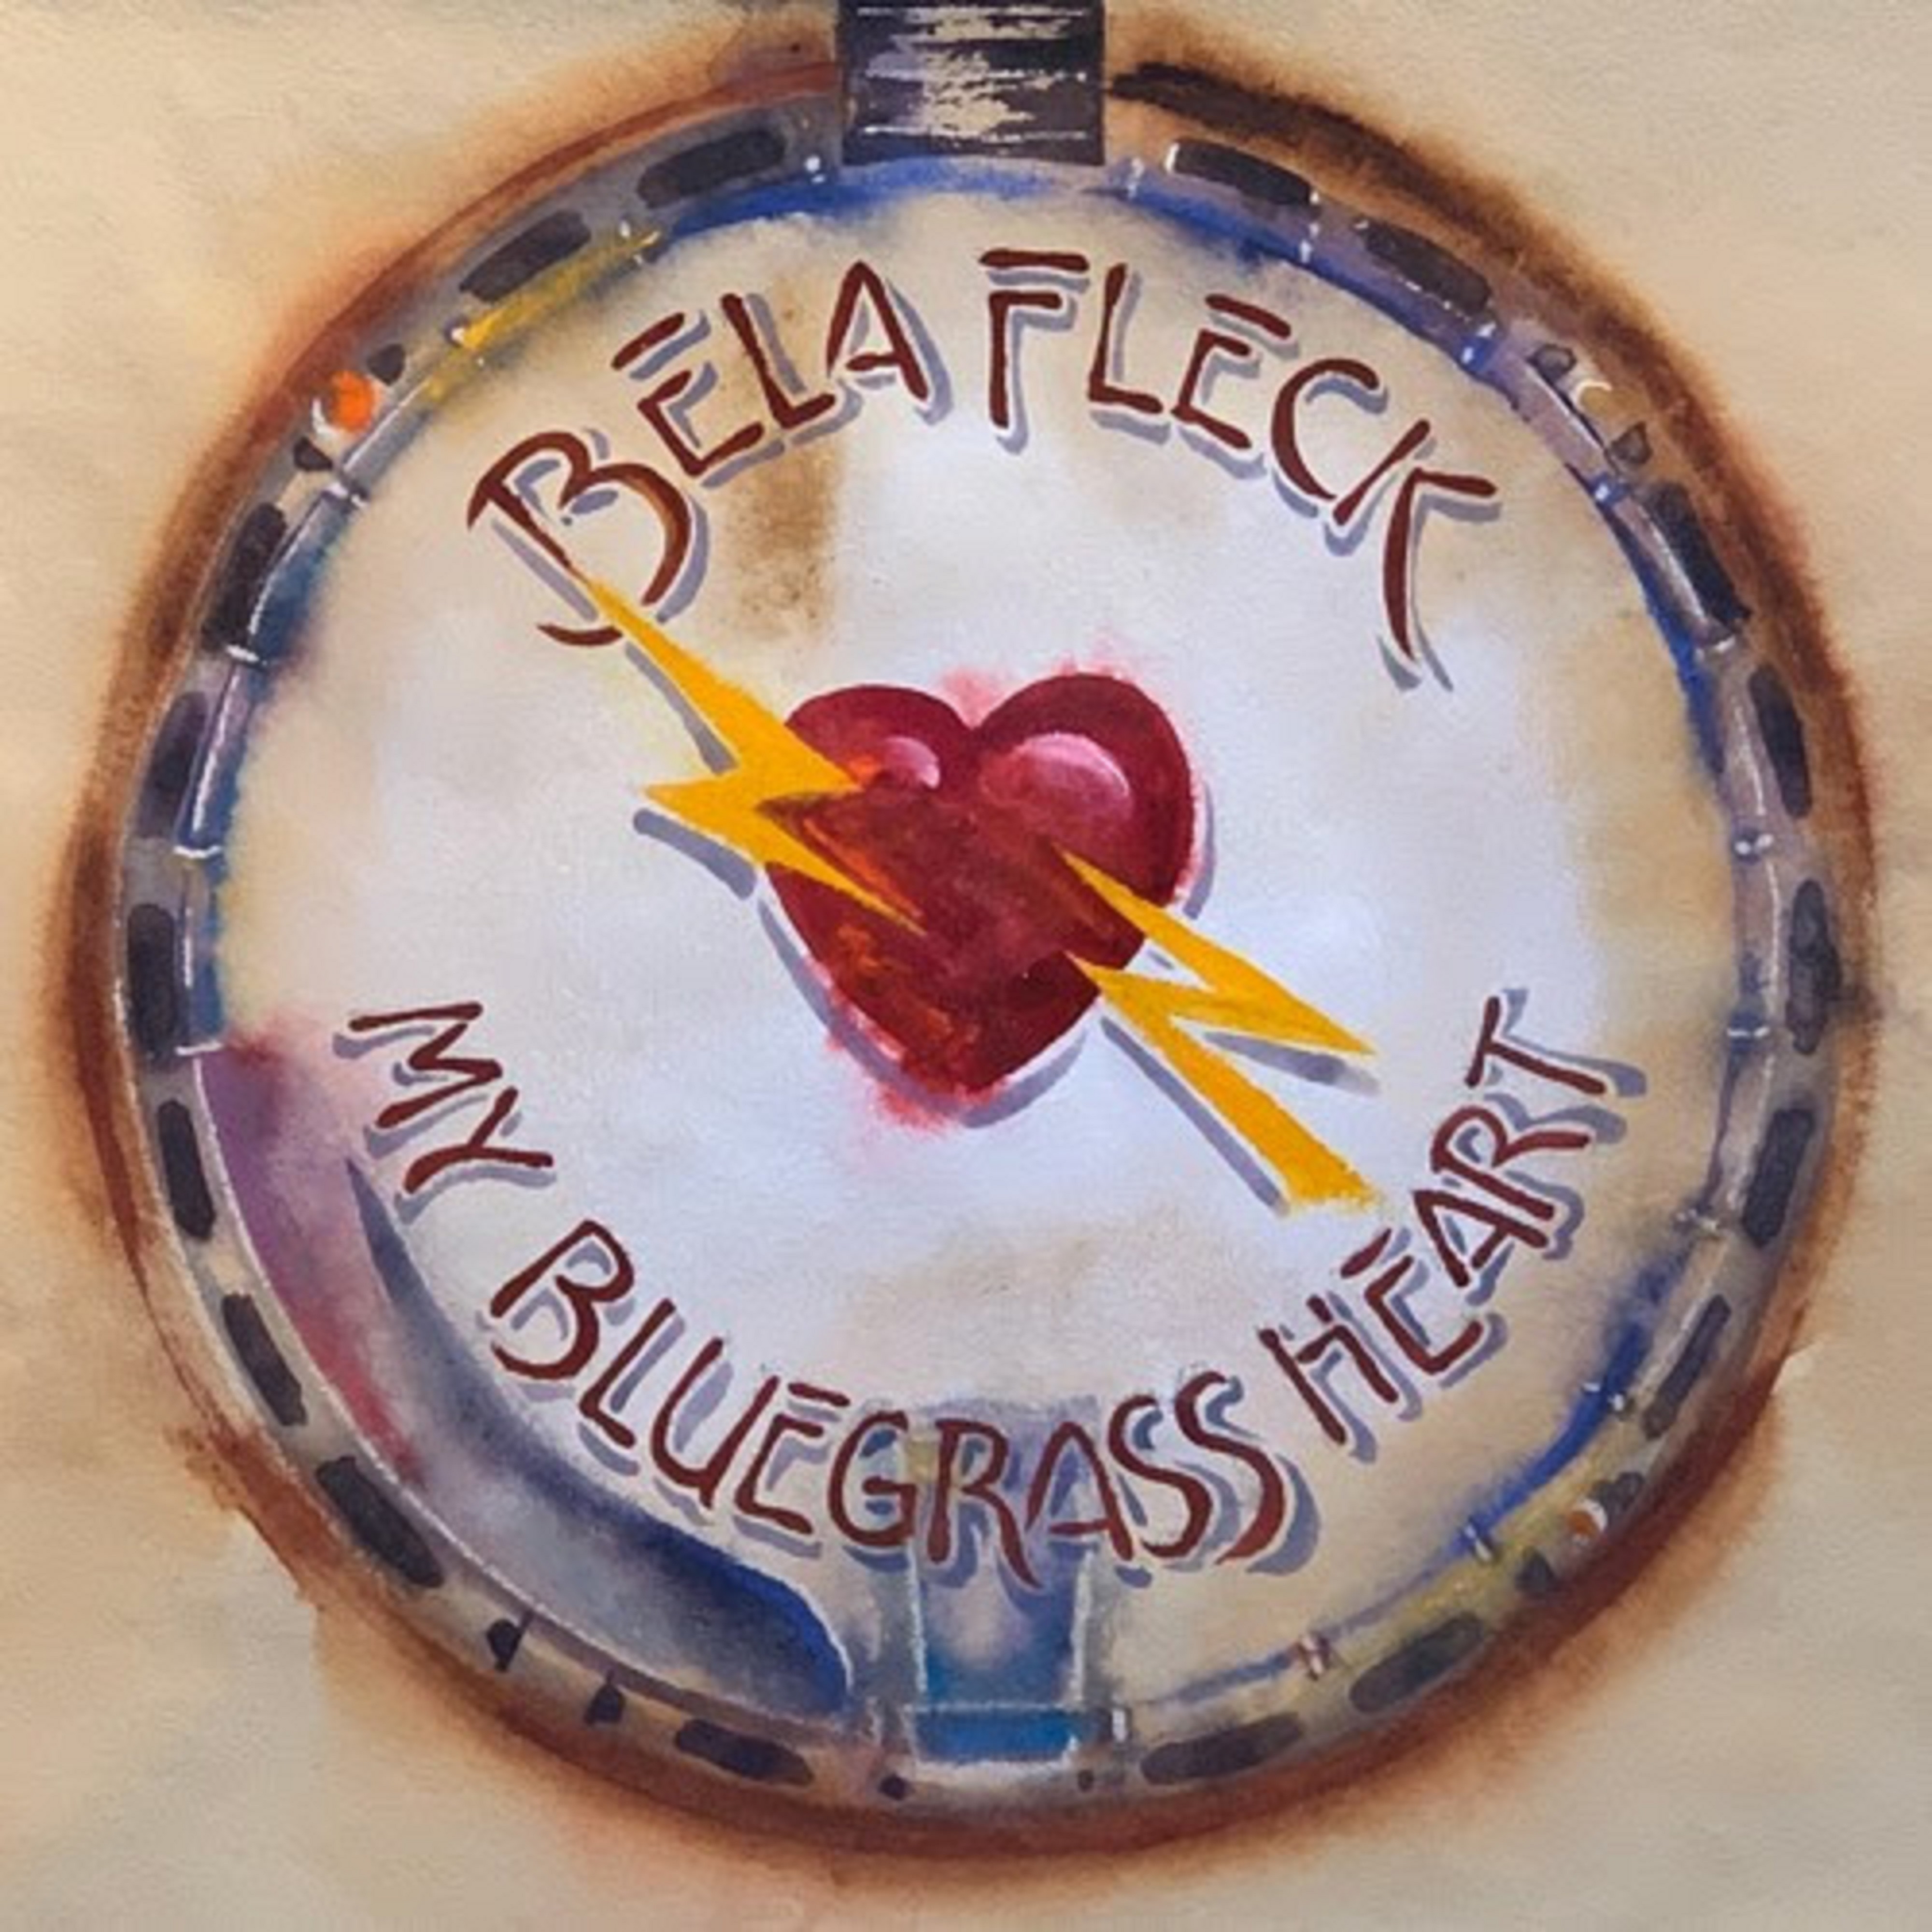 Béla Fleck's My Bluegrass Heart Out September 10th